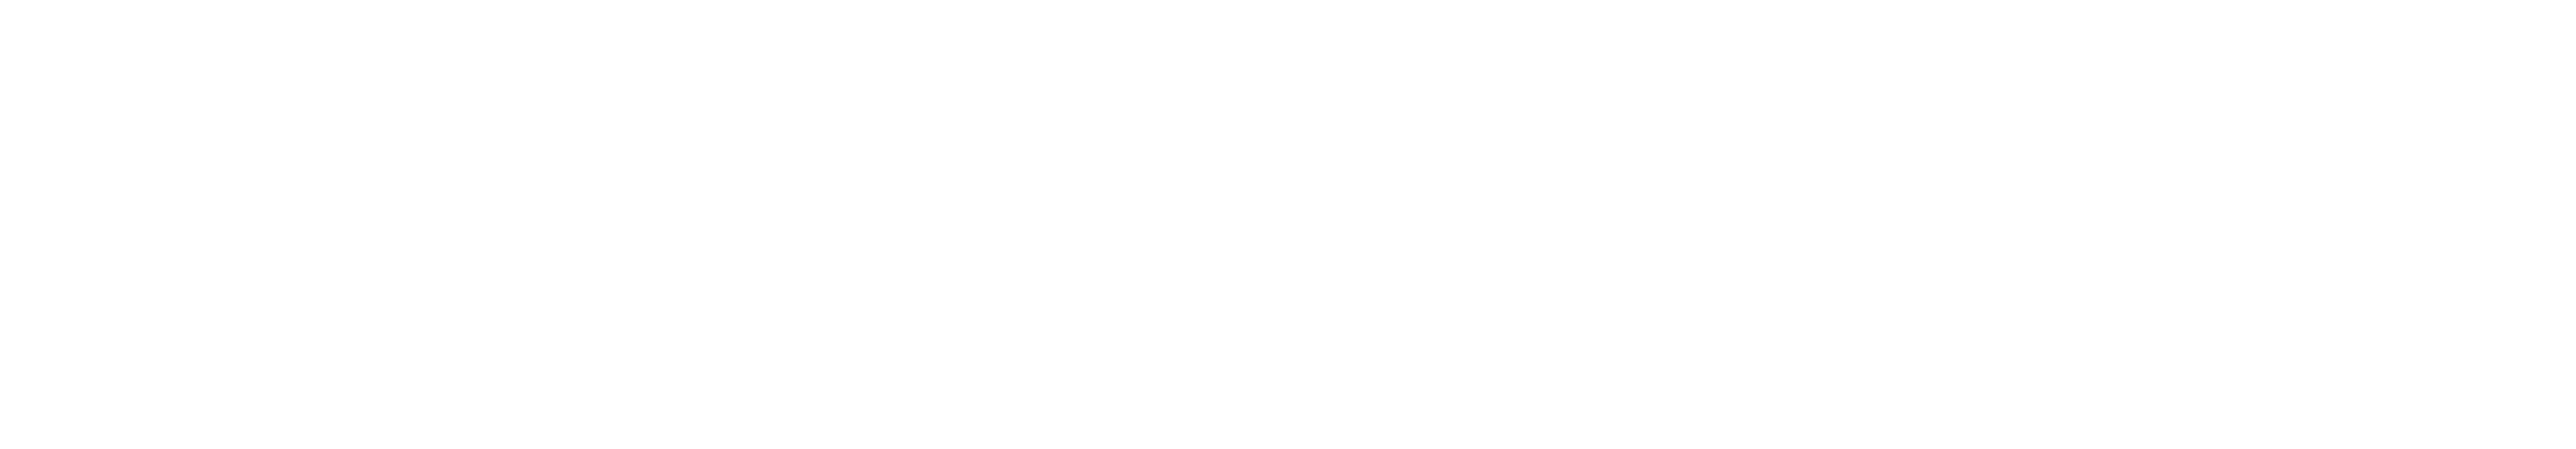 NAI Ohio Equities logo